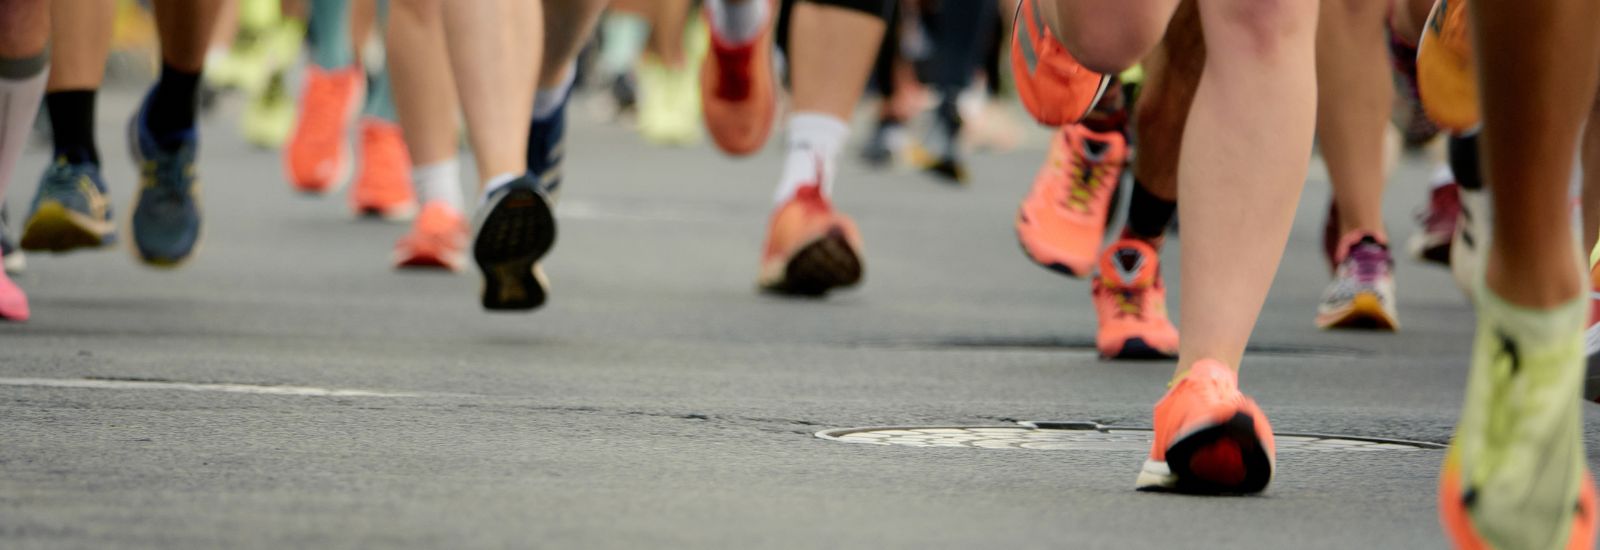 Feet running a half-marathon